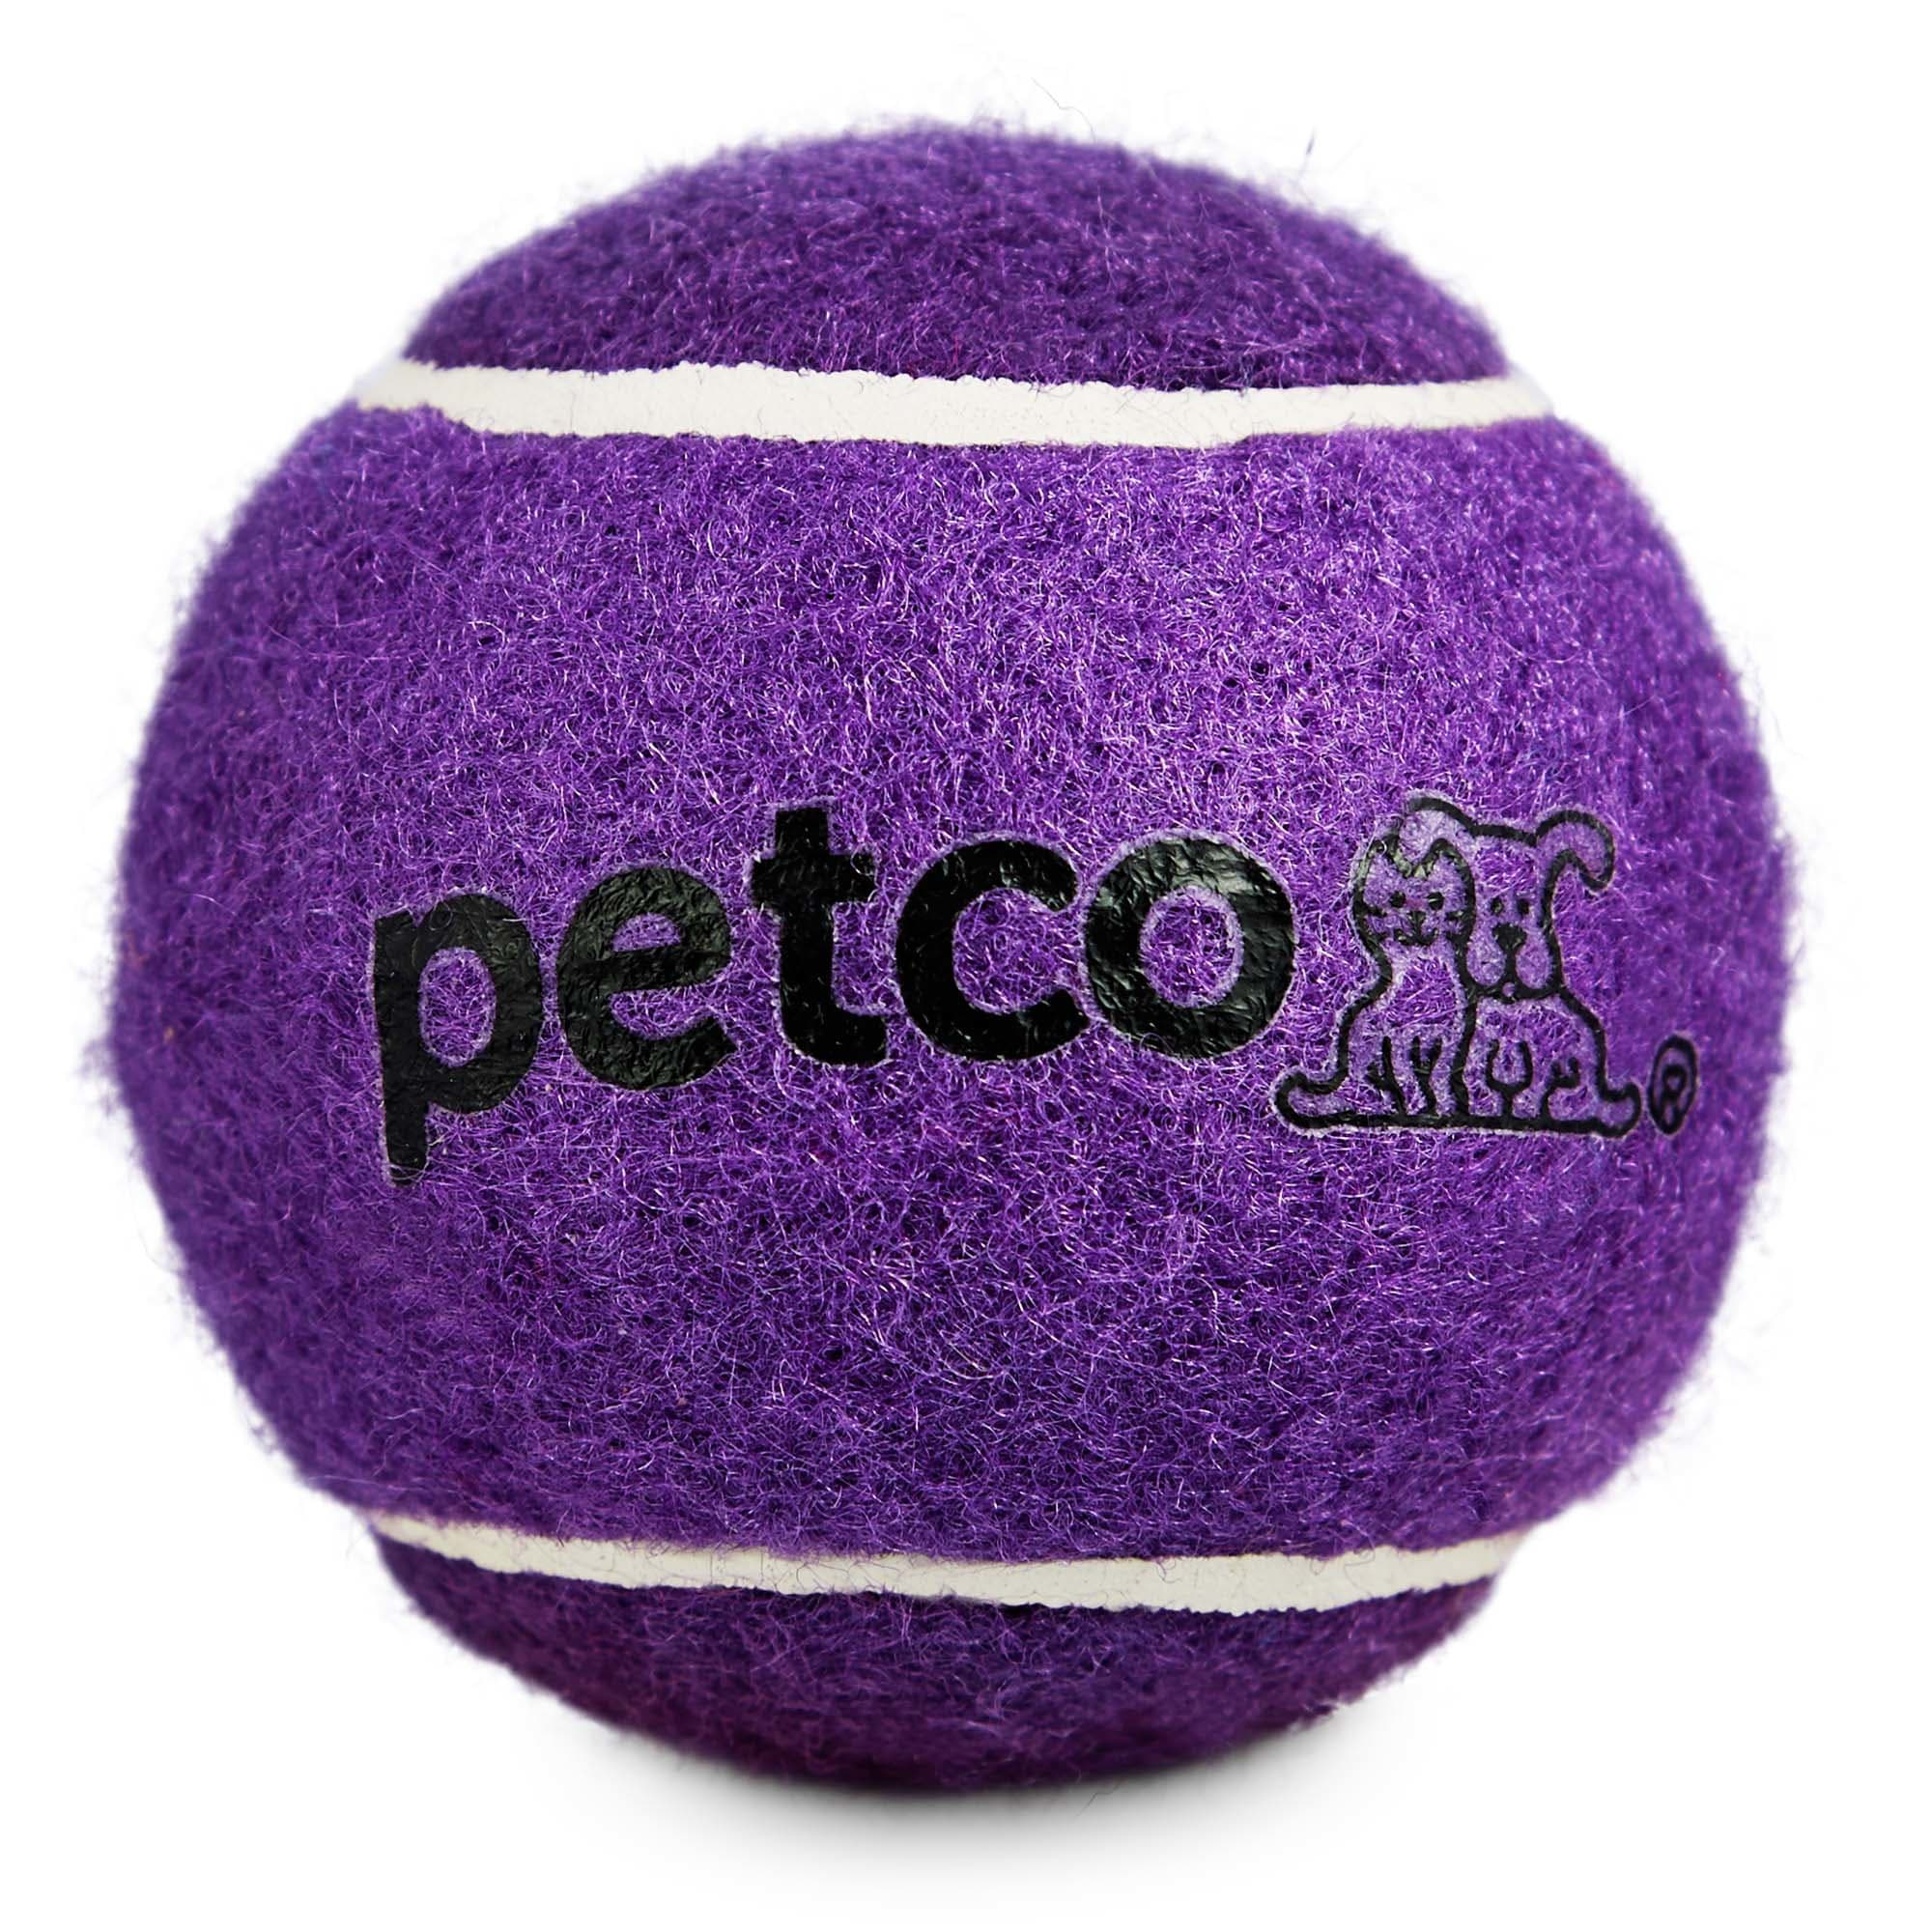 Petco Tennis Ball Dog Toy in Purple, 2 